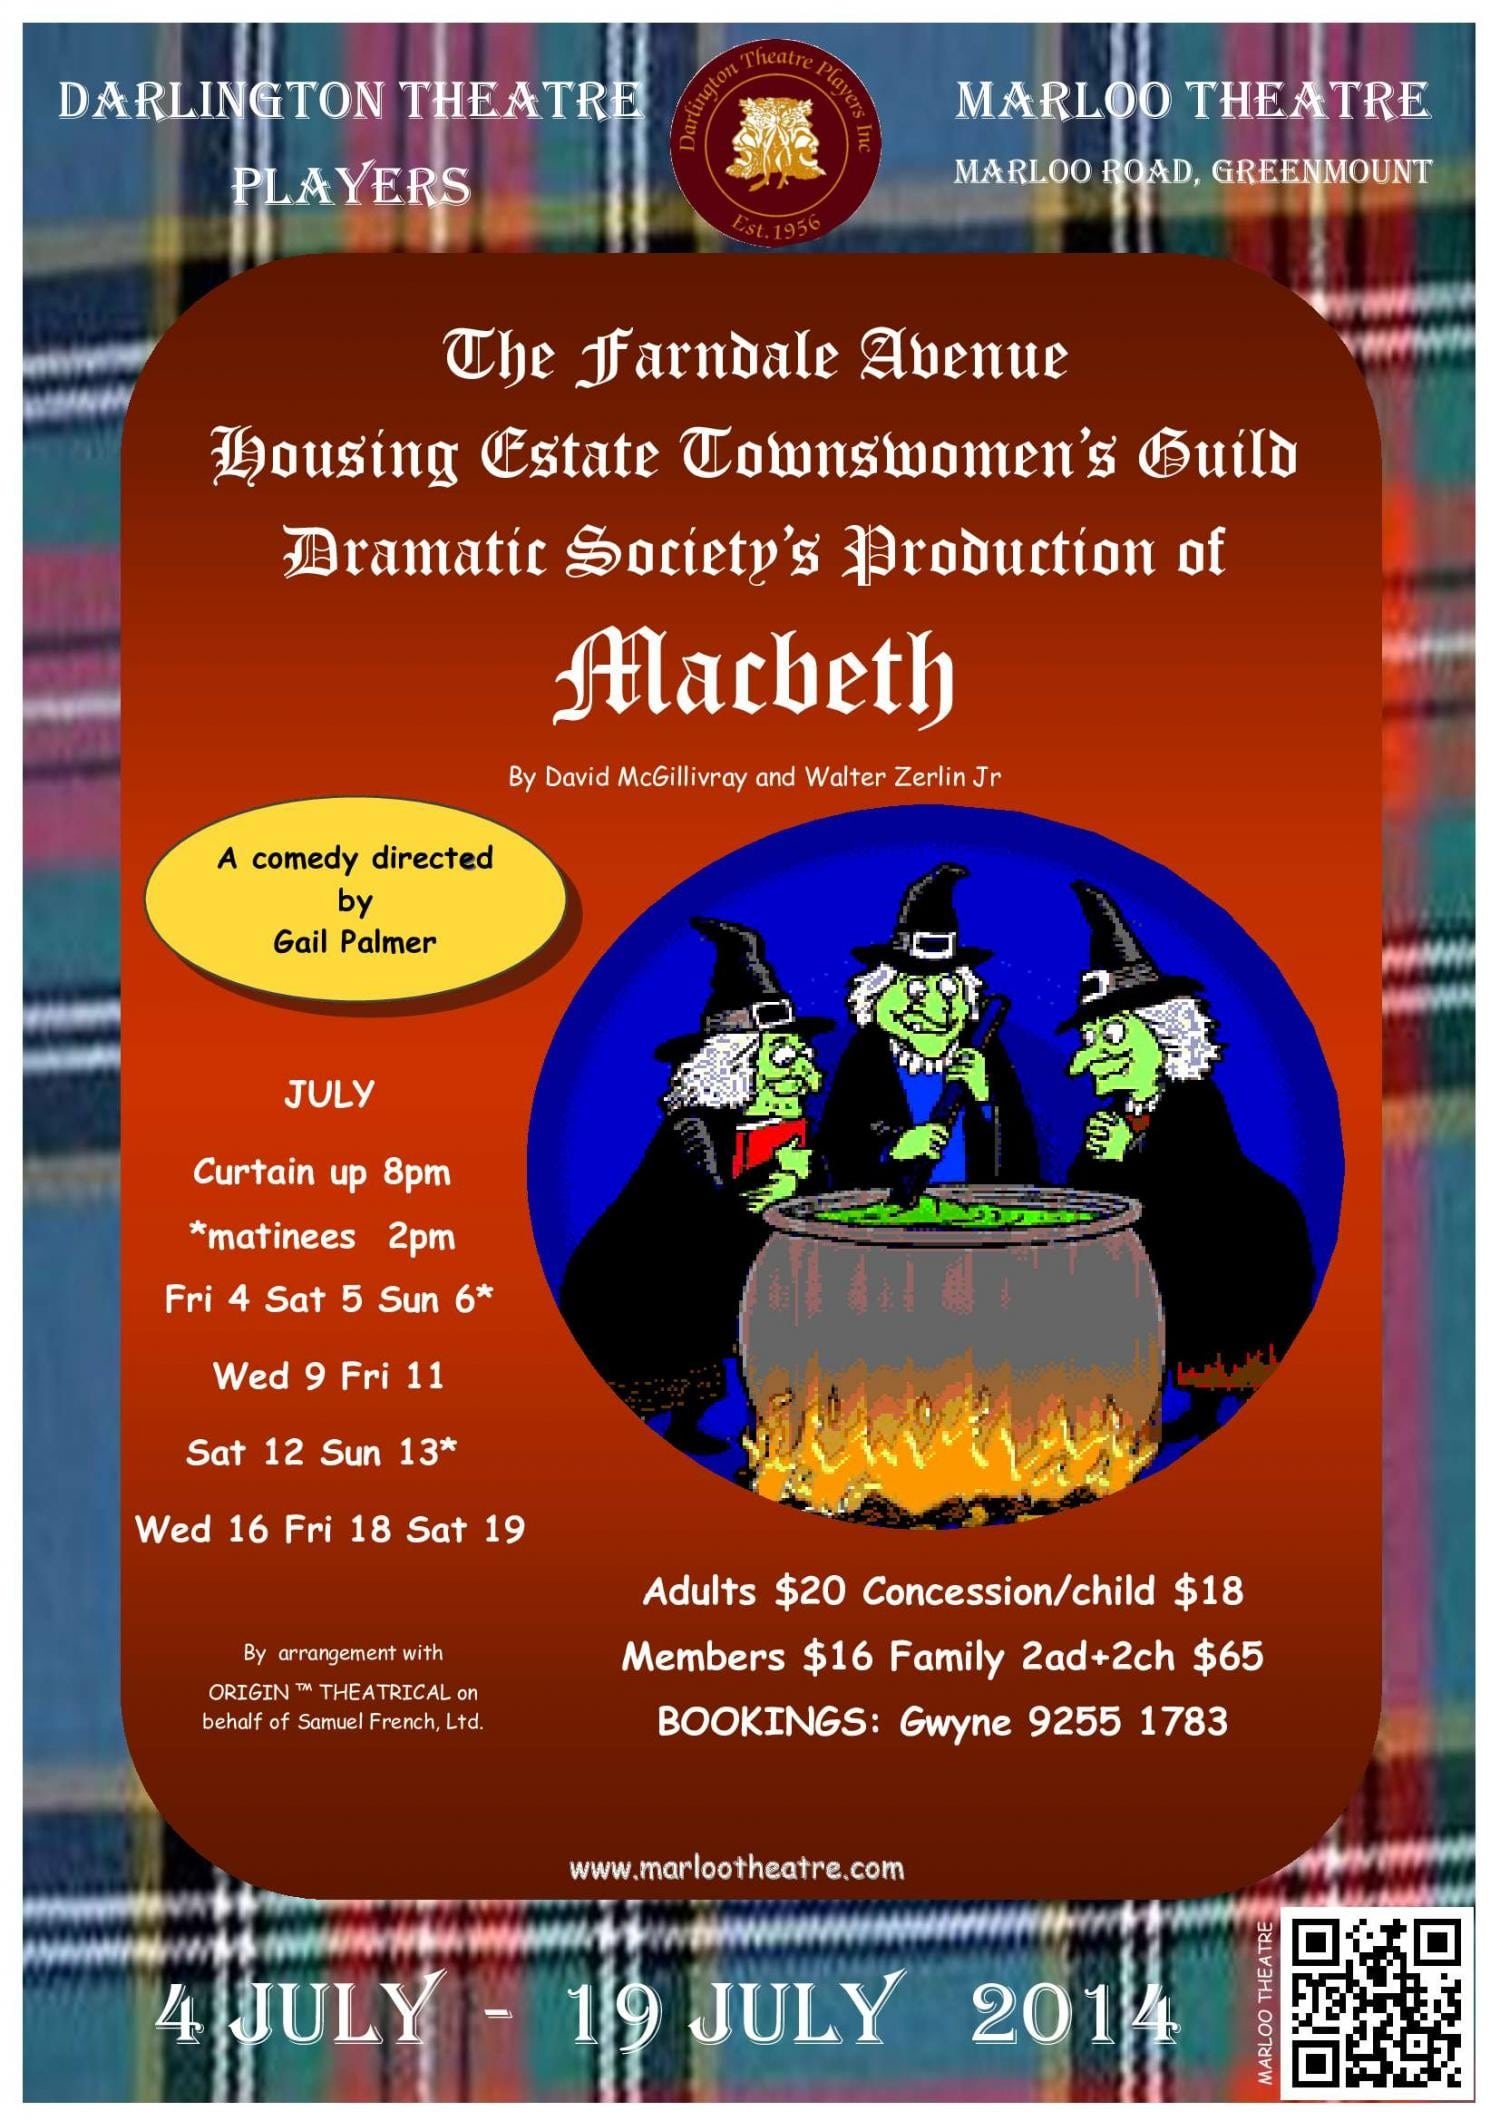 The Farndale Avenue Housing Estate Townswomen’s Guild Bramatic Society’s Production of Macbeth